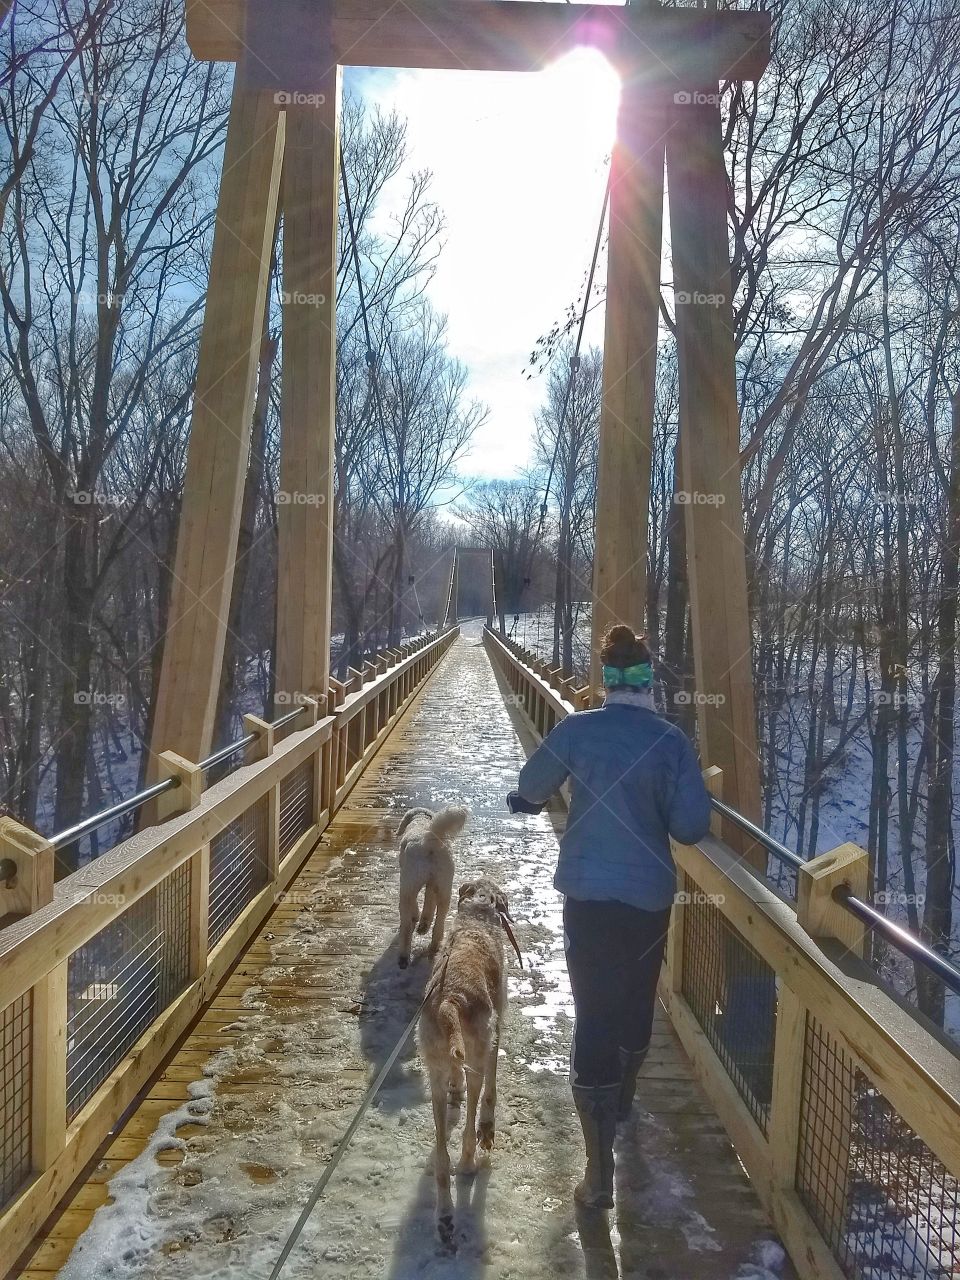 Suspension bridge with the dogs